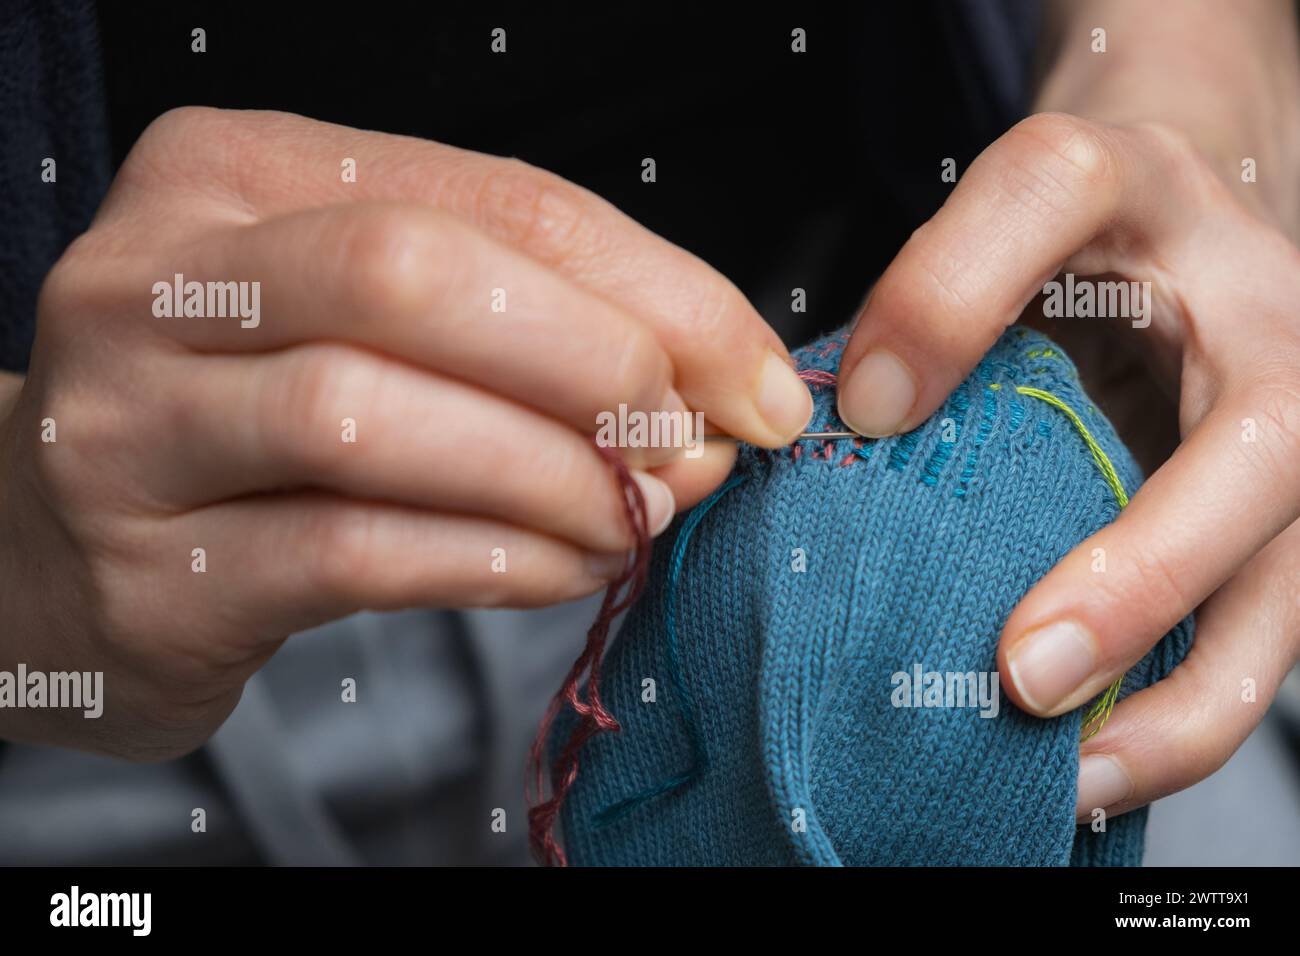 Mending clothes. Visible mending repairing sock. Darning old socks, reducing waste, slow fashion. Repair concept, selective focus. Stock Photo